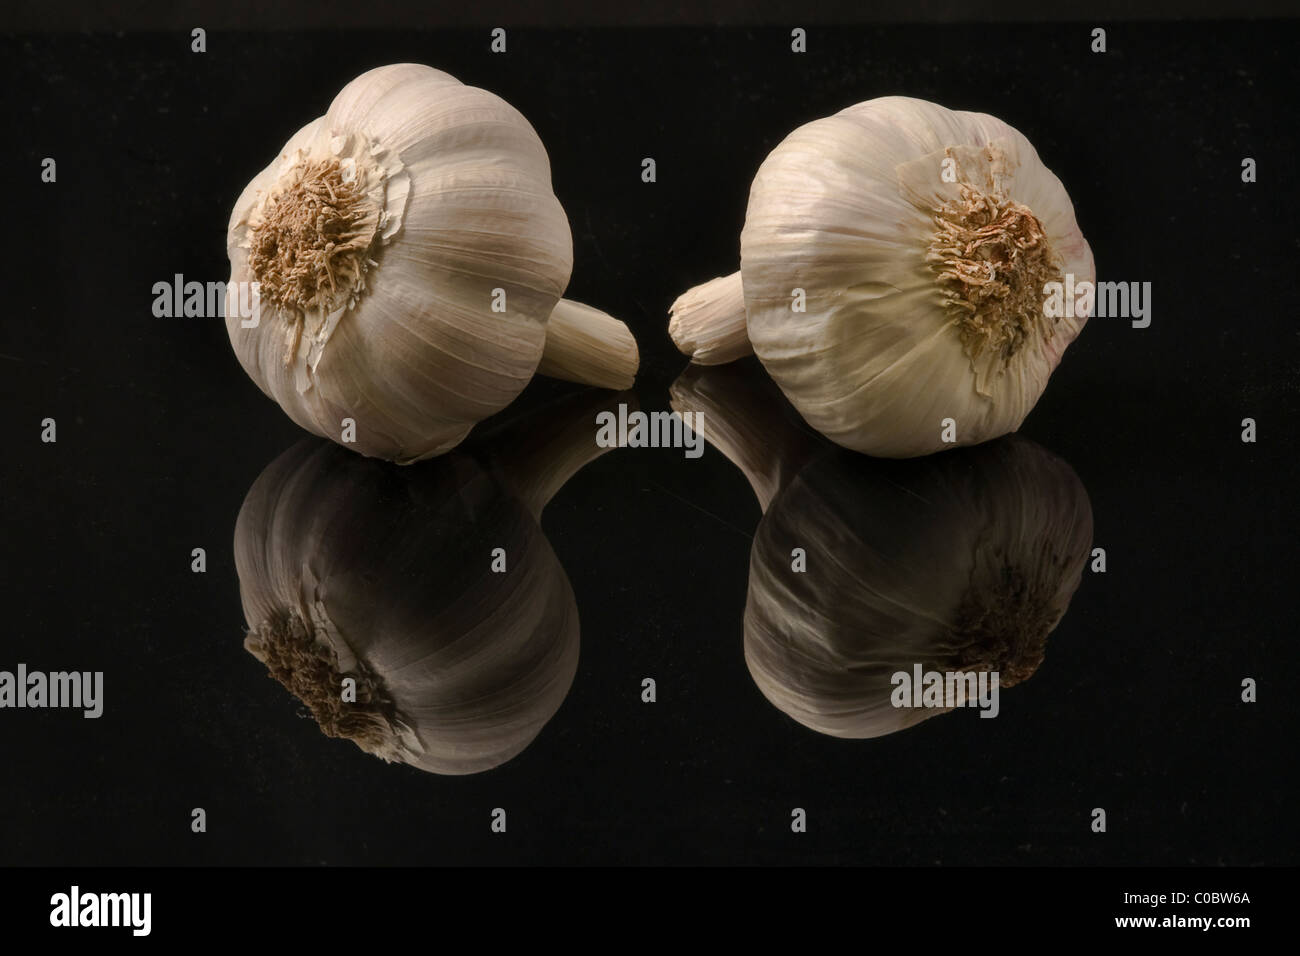 Garlic bulbs on a black background Stock Photo